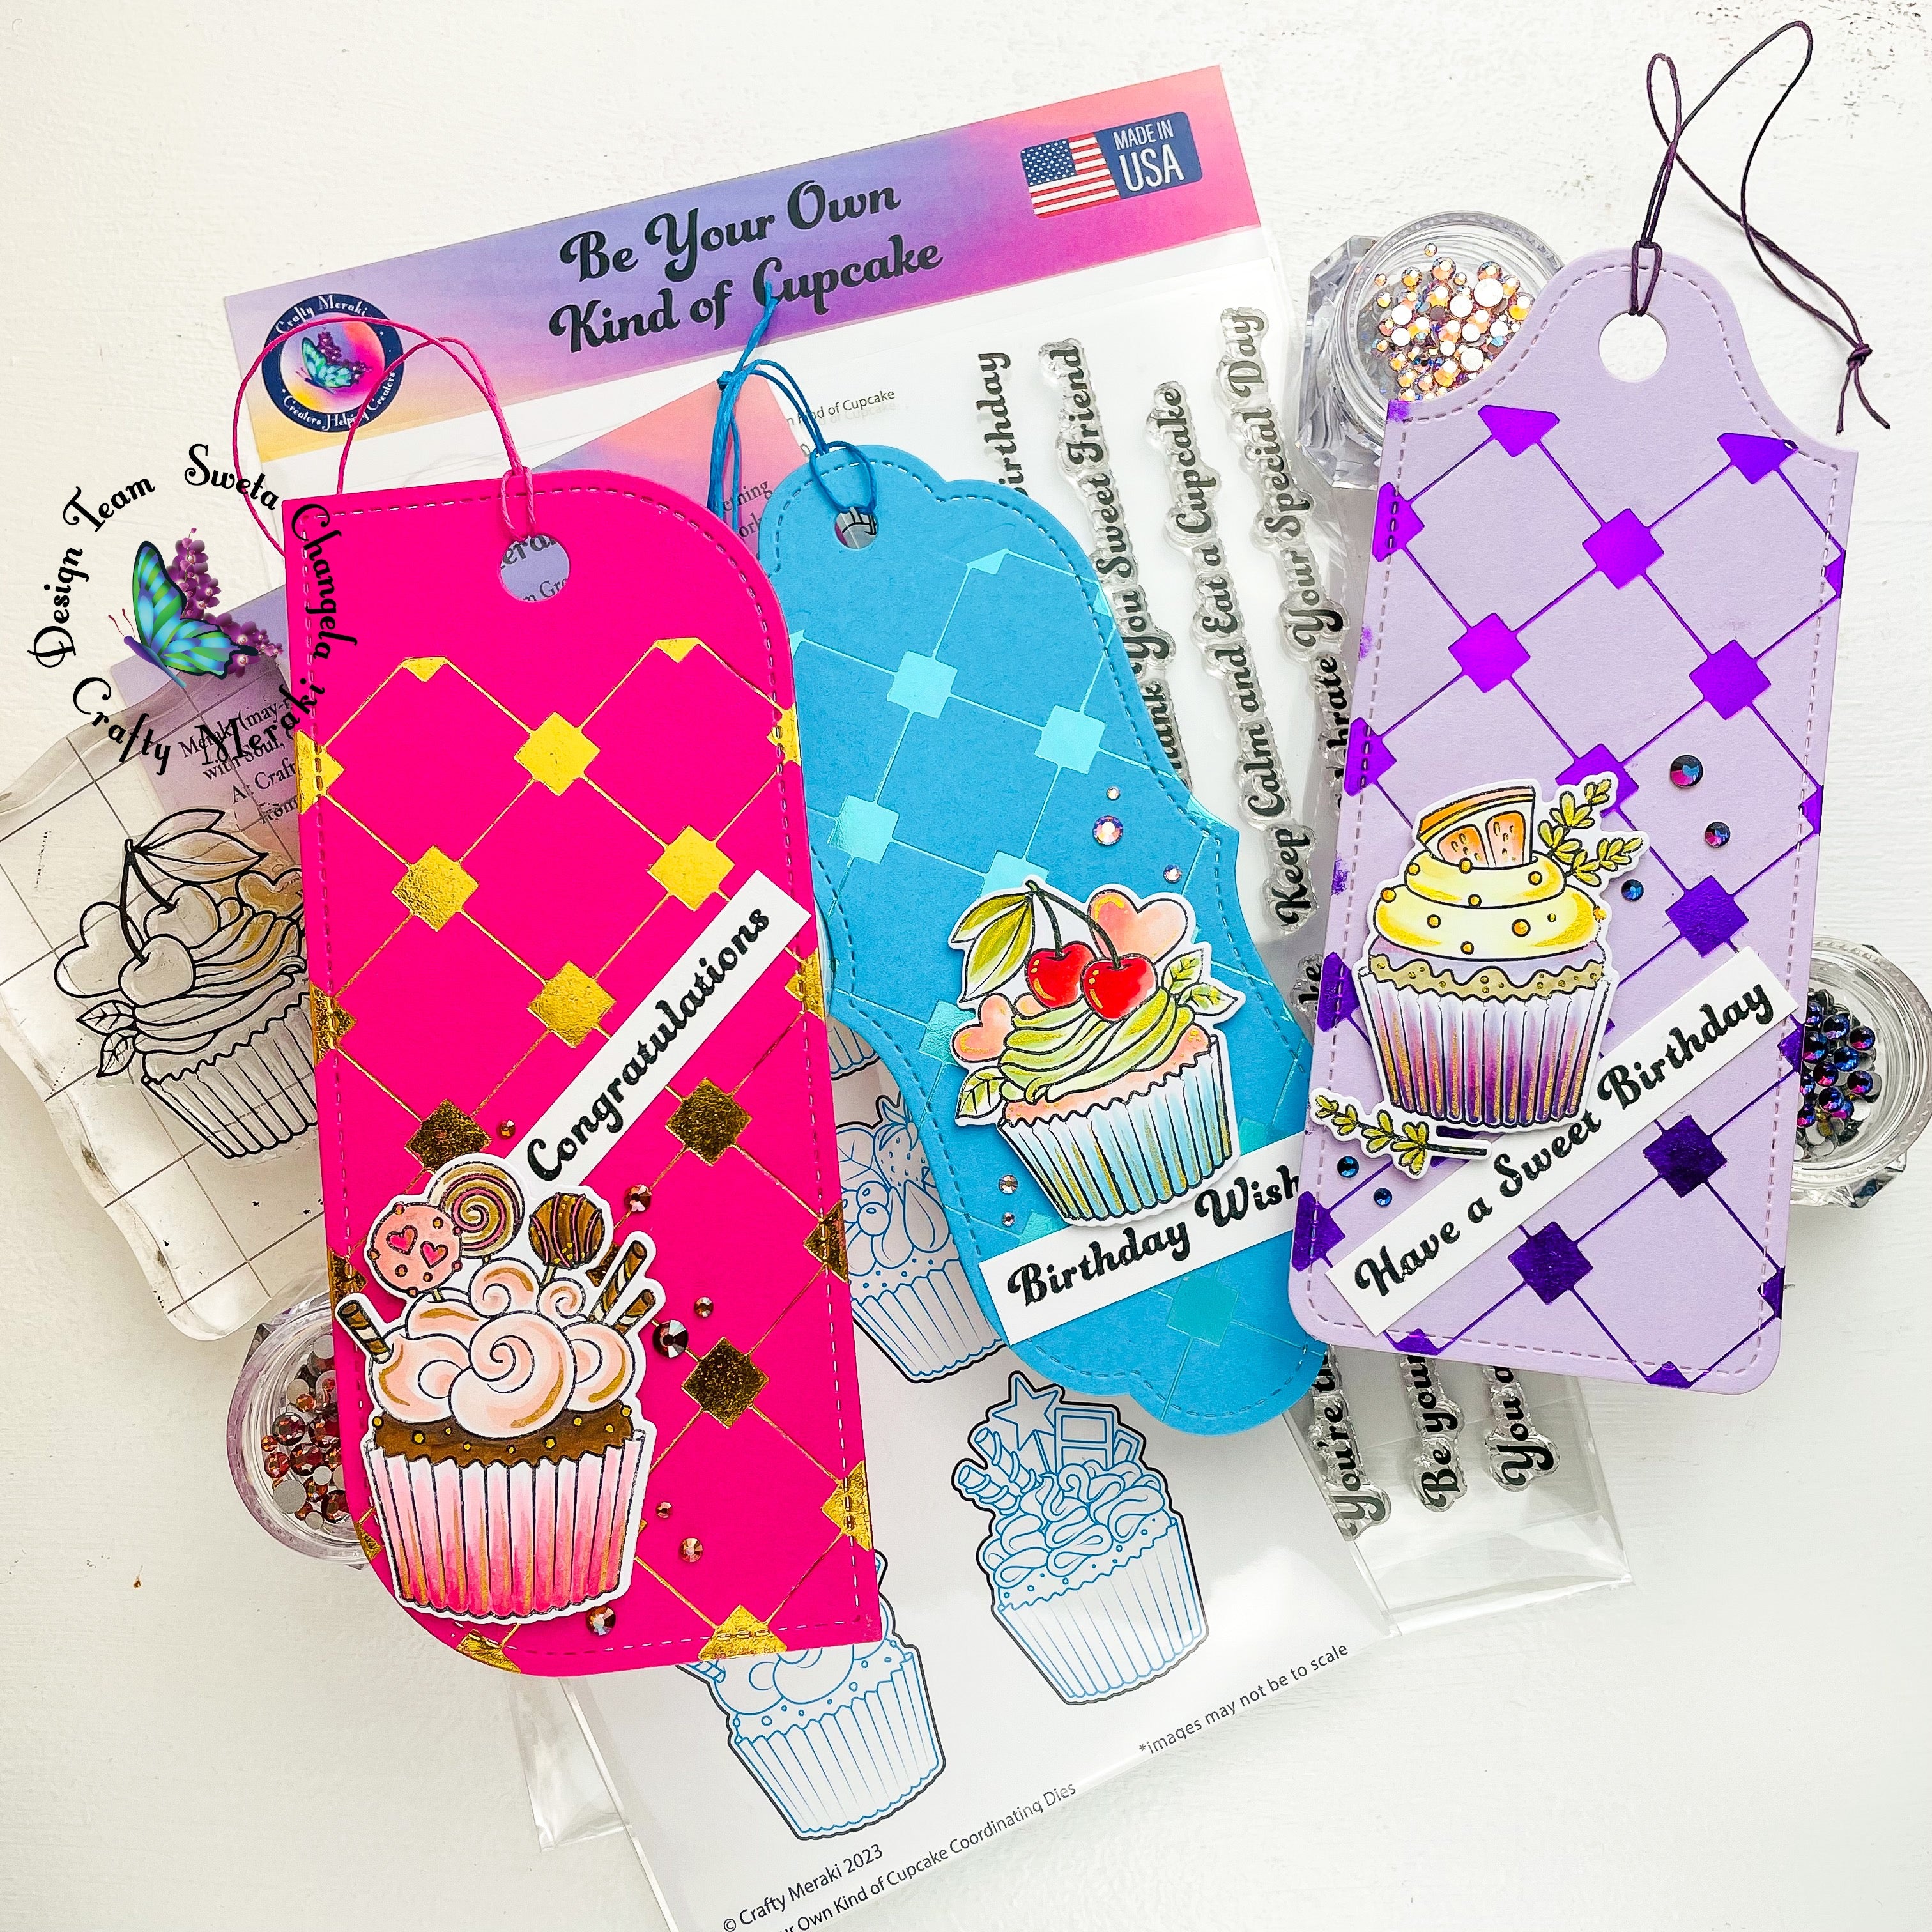 Crafty Meraki Be Your Own Kind of Cupcake Stamp set - Crafty Meraki